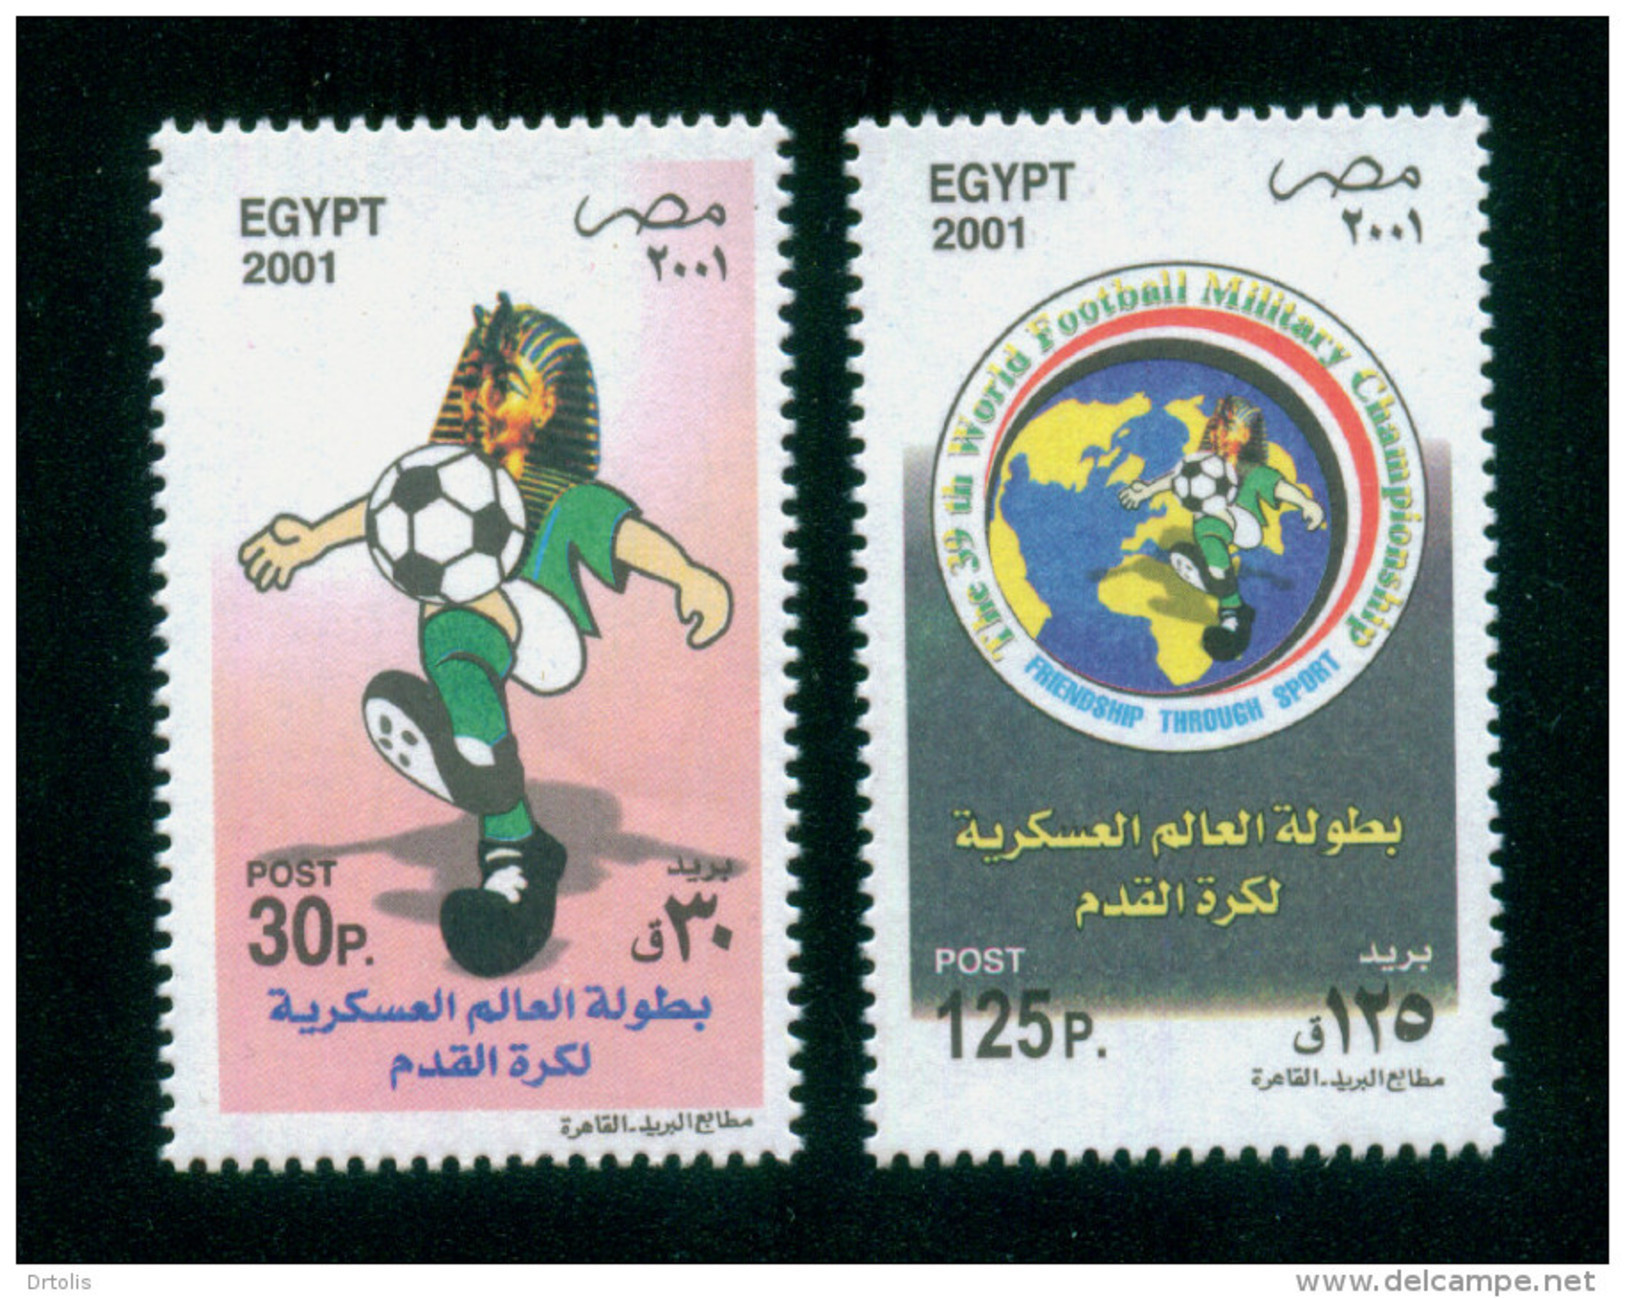 EGYPT / 2001 / SPORT / FOOTBALL / WORLD MILITARY FOOTBALL CHAMPIONSHIP / TUT ANKH AMUN / MAP / FLAG / MNH / VF - Ungebraucht